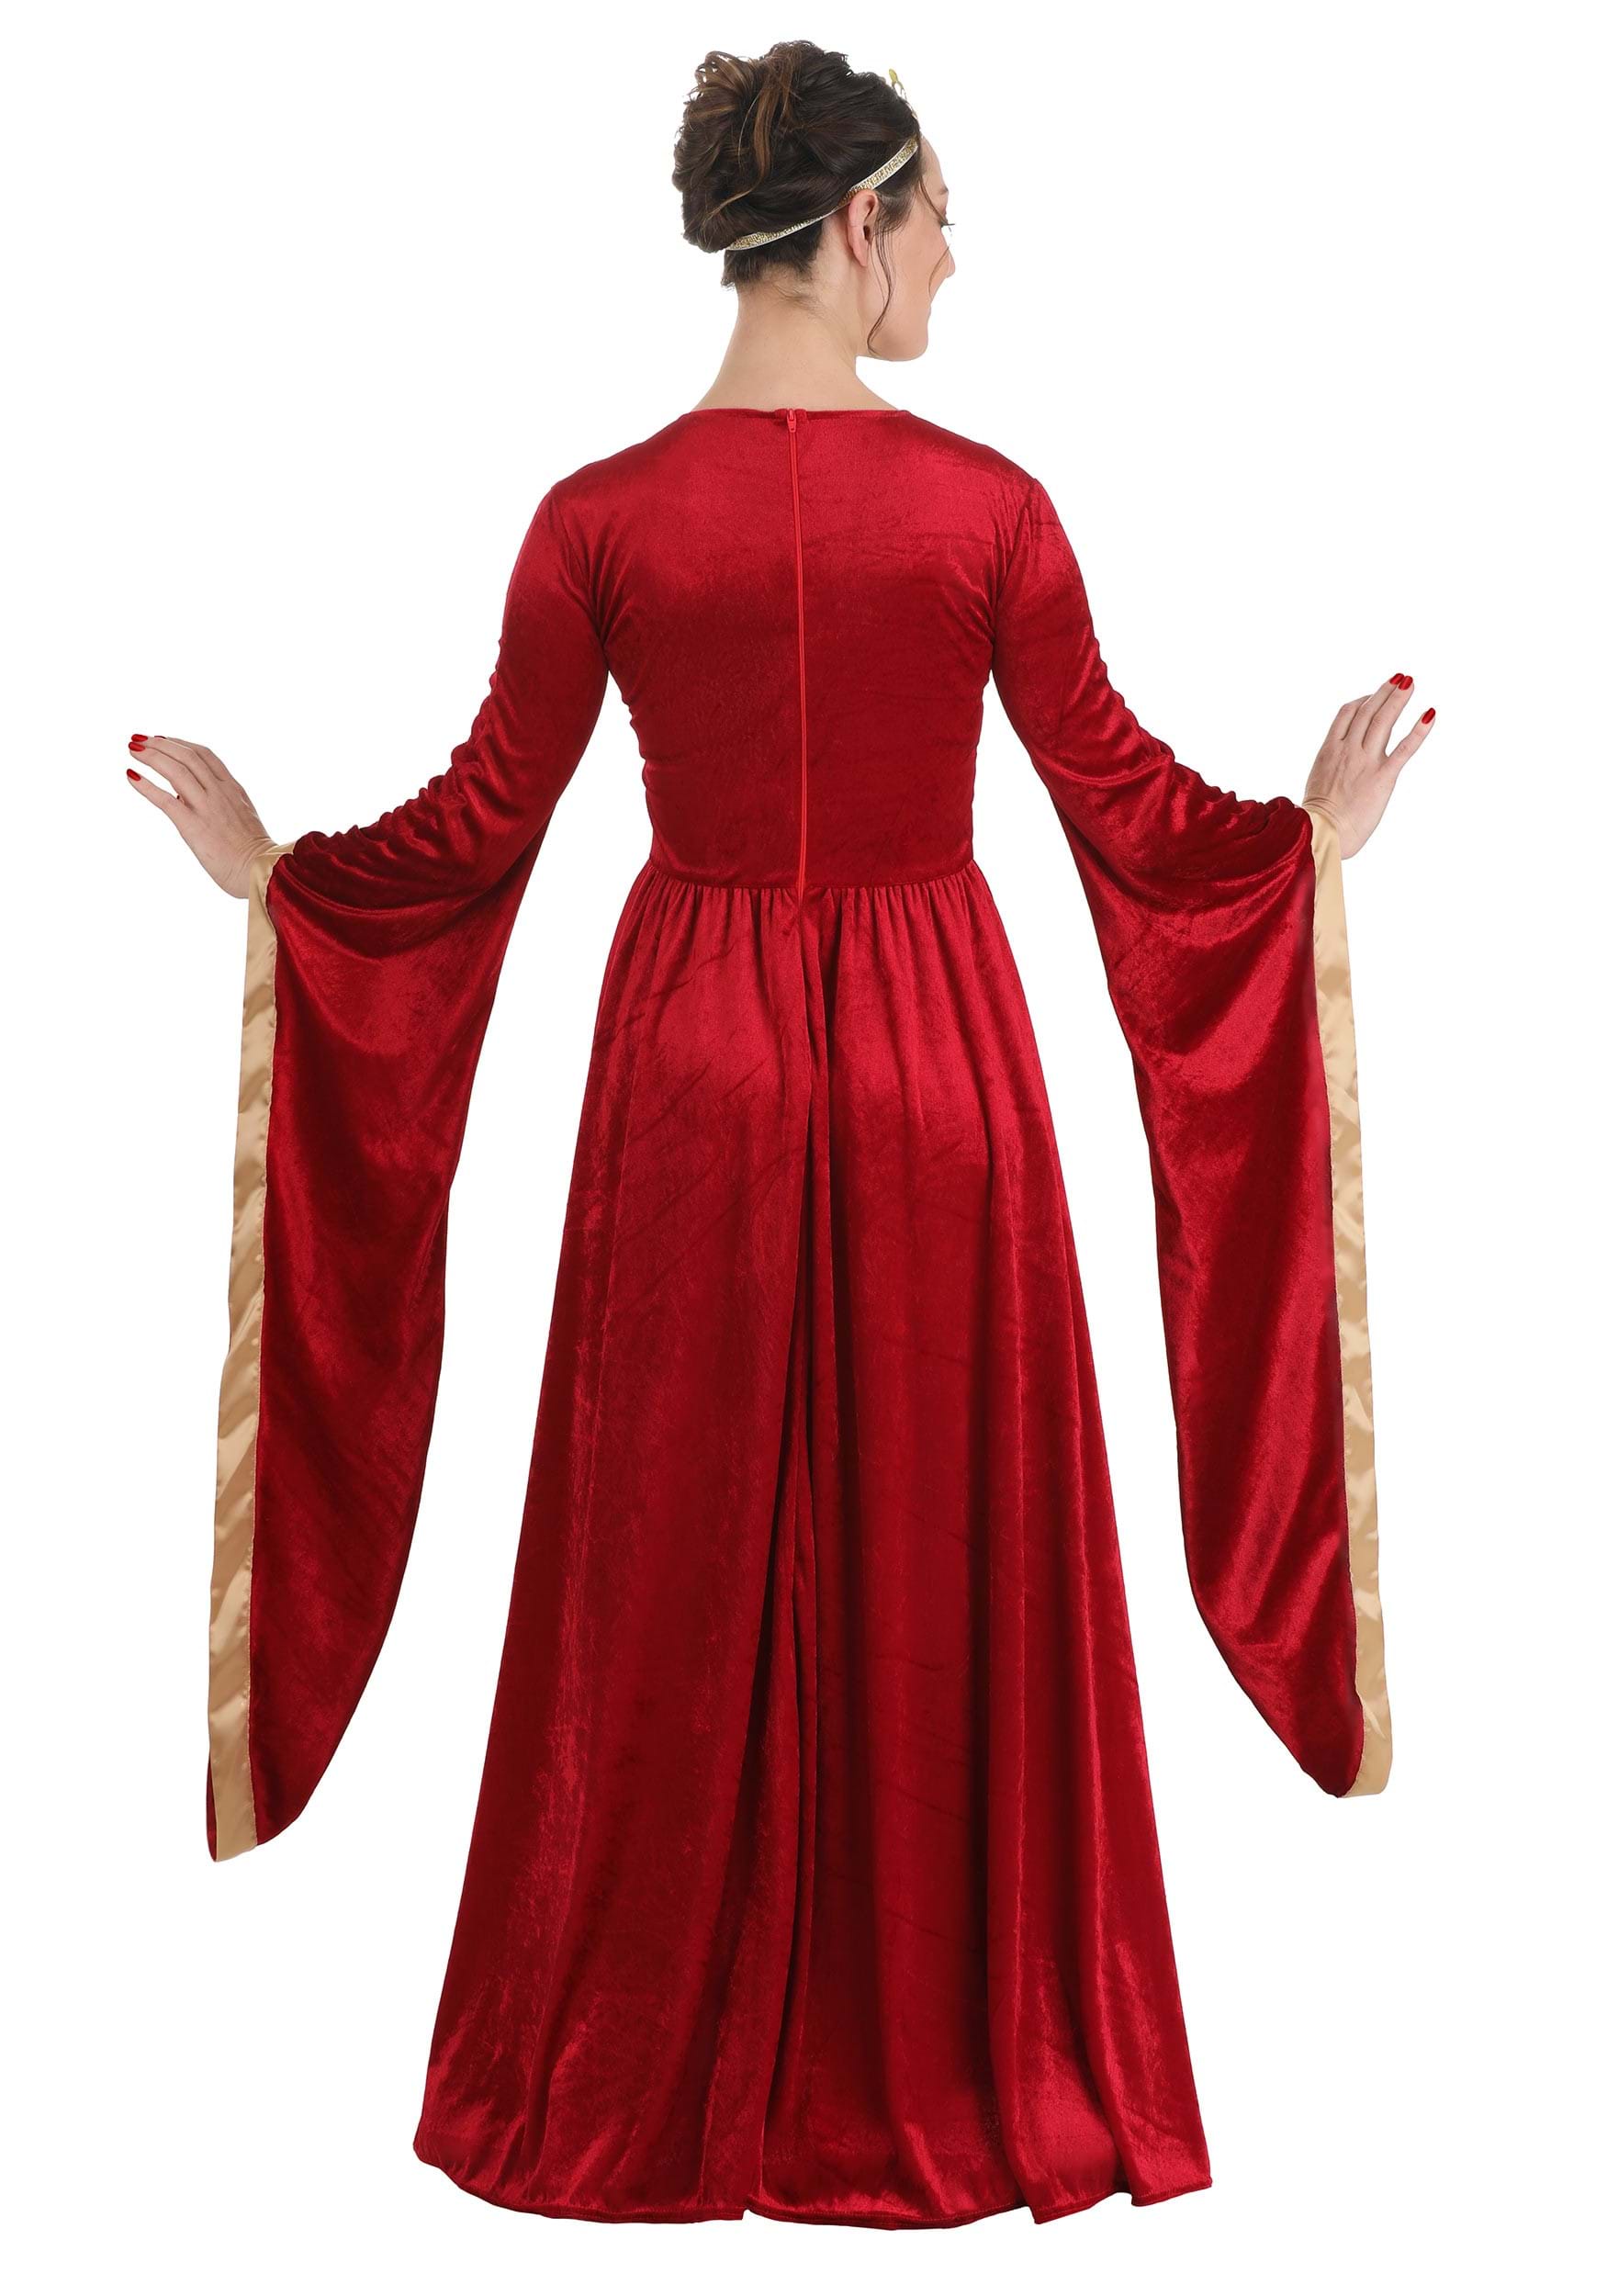 Adult Renaissance Maiden Costume , Historical Costumes